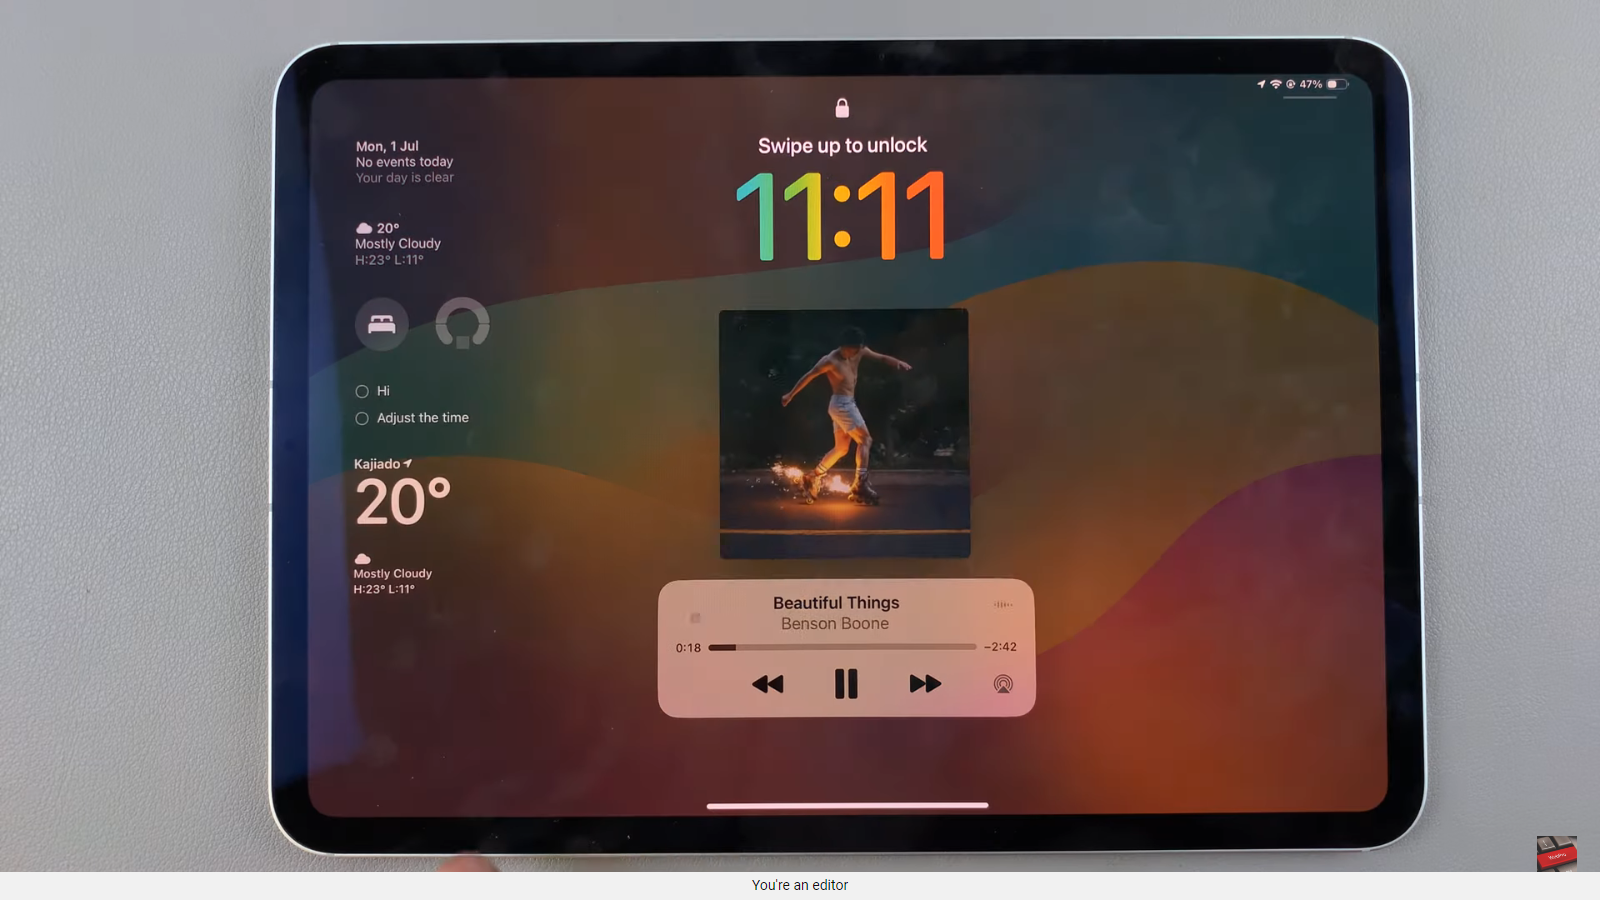 How To See Full Screen Album Art On Lock Screen Of iPad